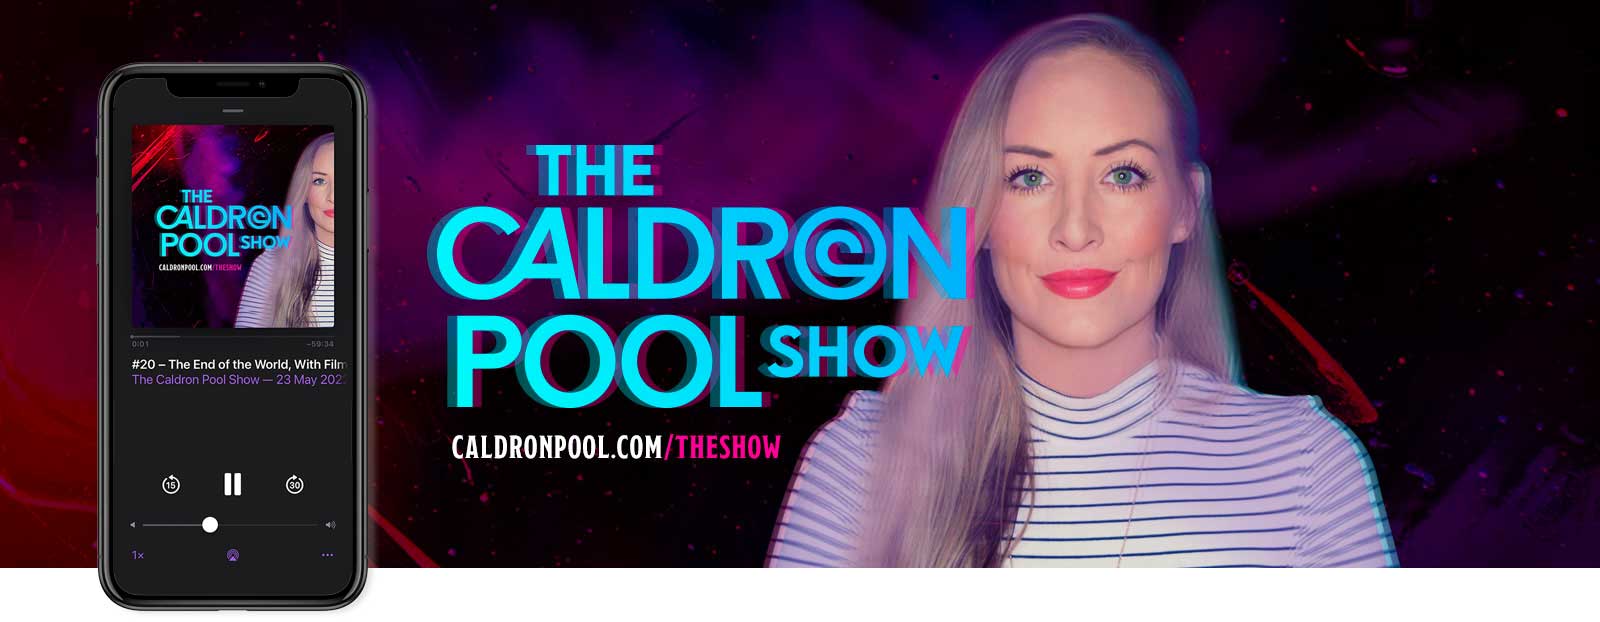 The Caldron Pool Show